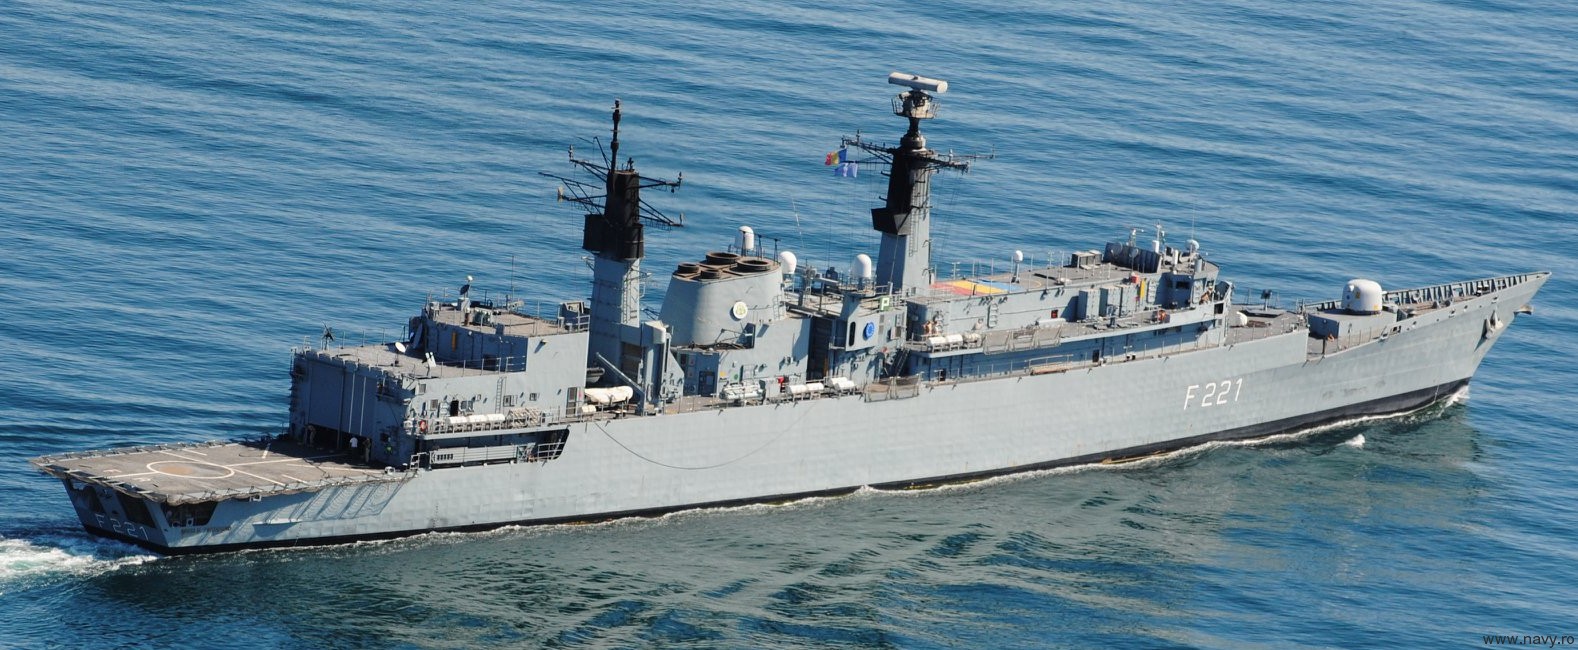 f-221 ros regele ferdinand frigate romanian navy type 22 broadsword class 04